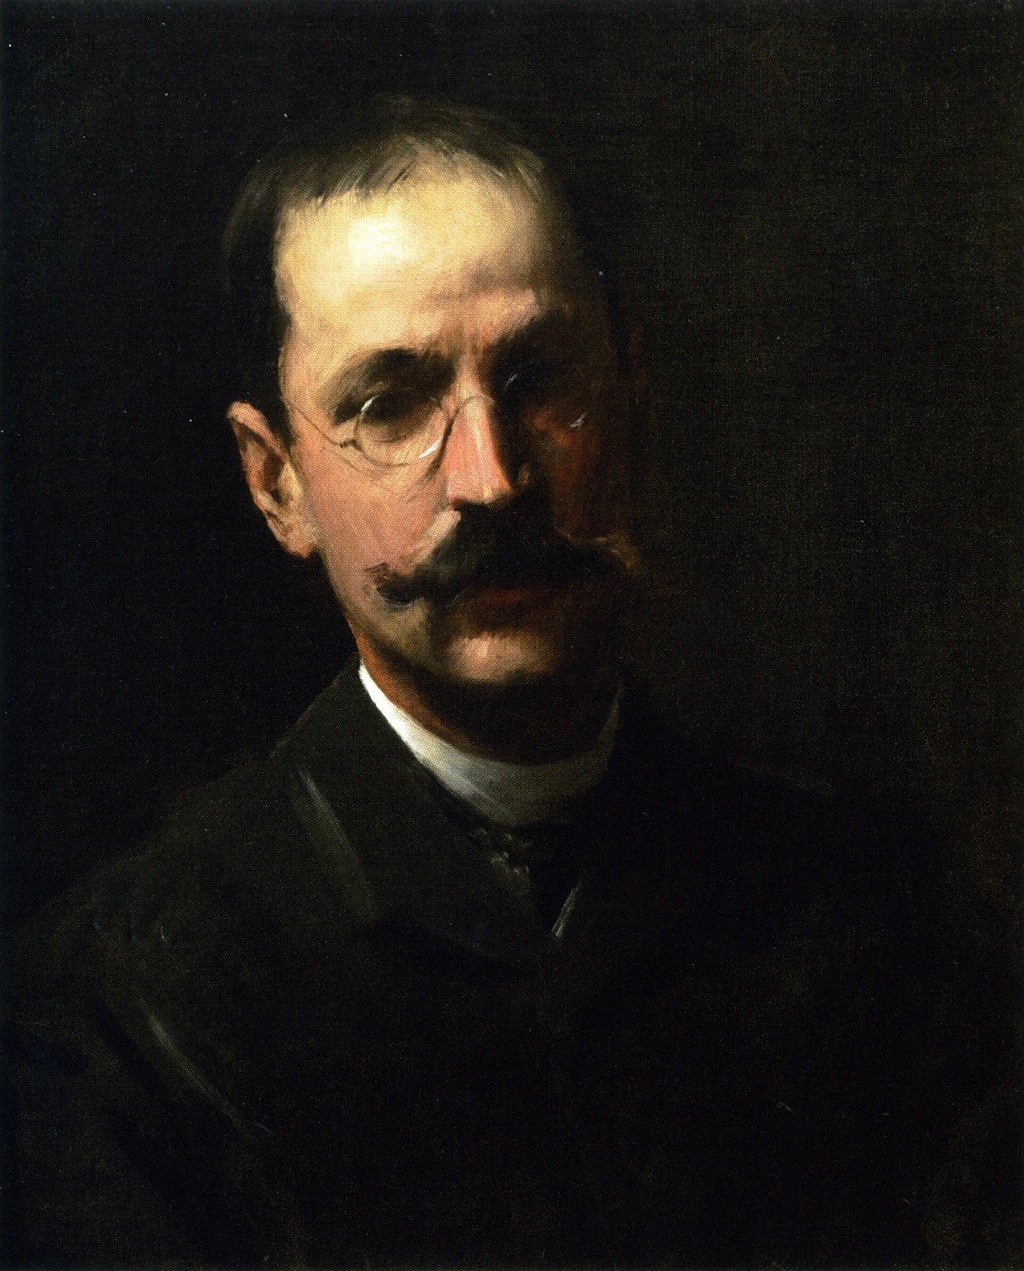 William Launt Palmer by William Merritt Chase, 1887